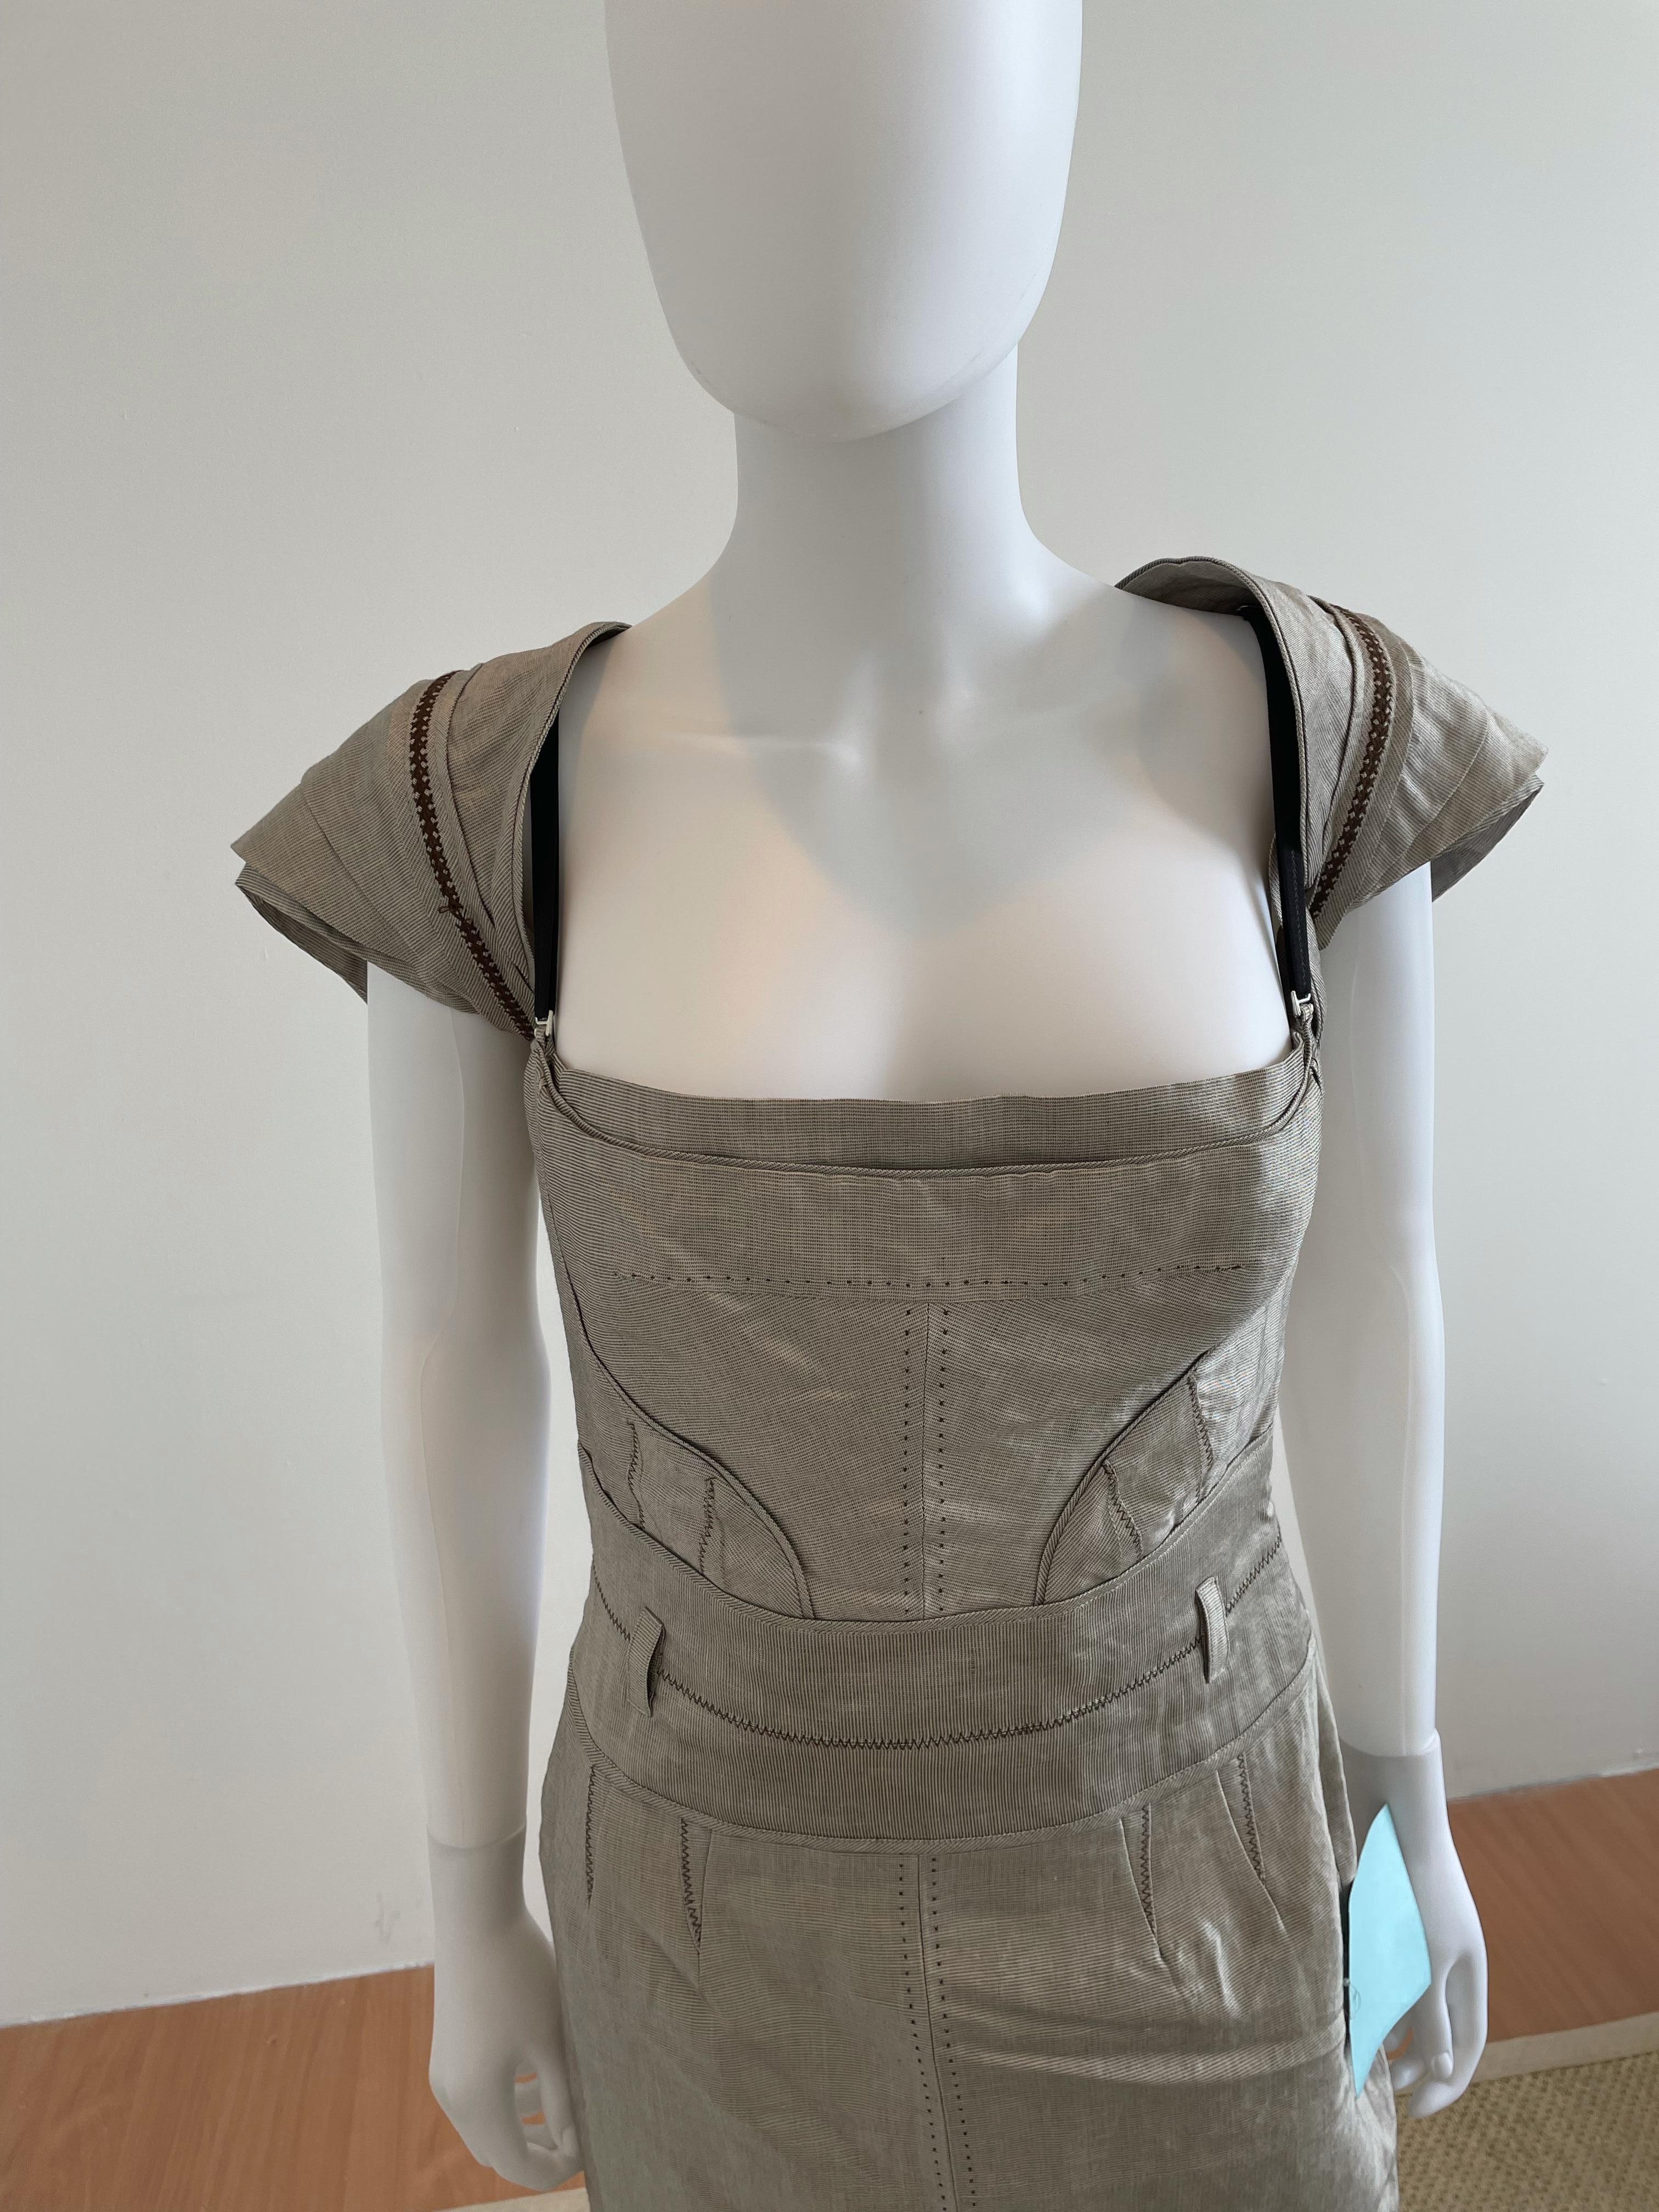 Antonio Berardi Structured Dress with Matching Caplet For Sale 4